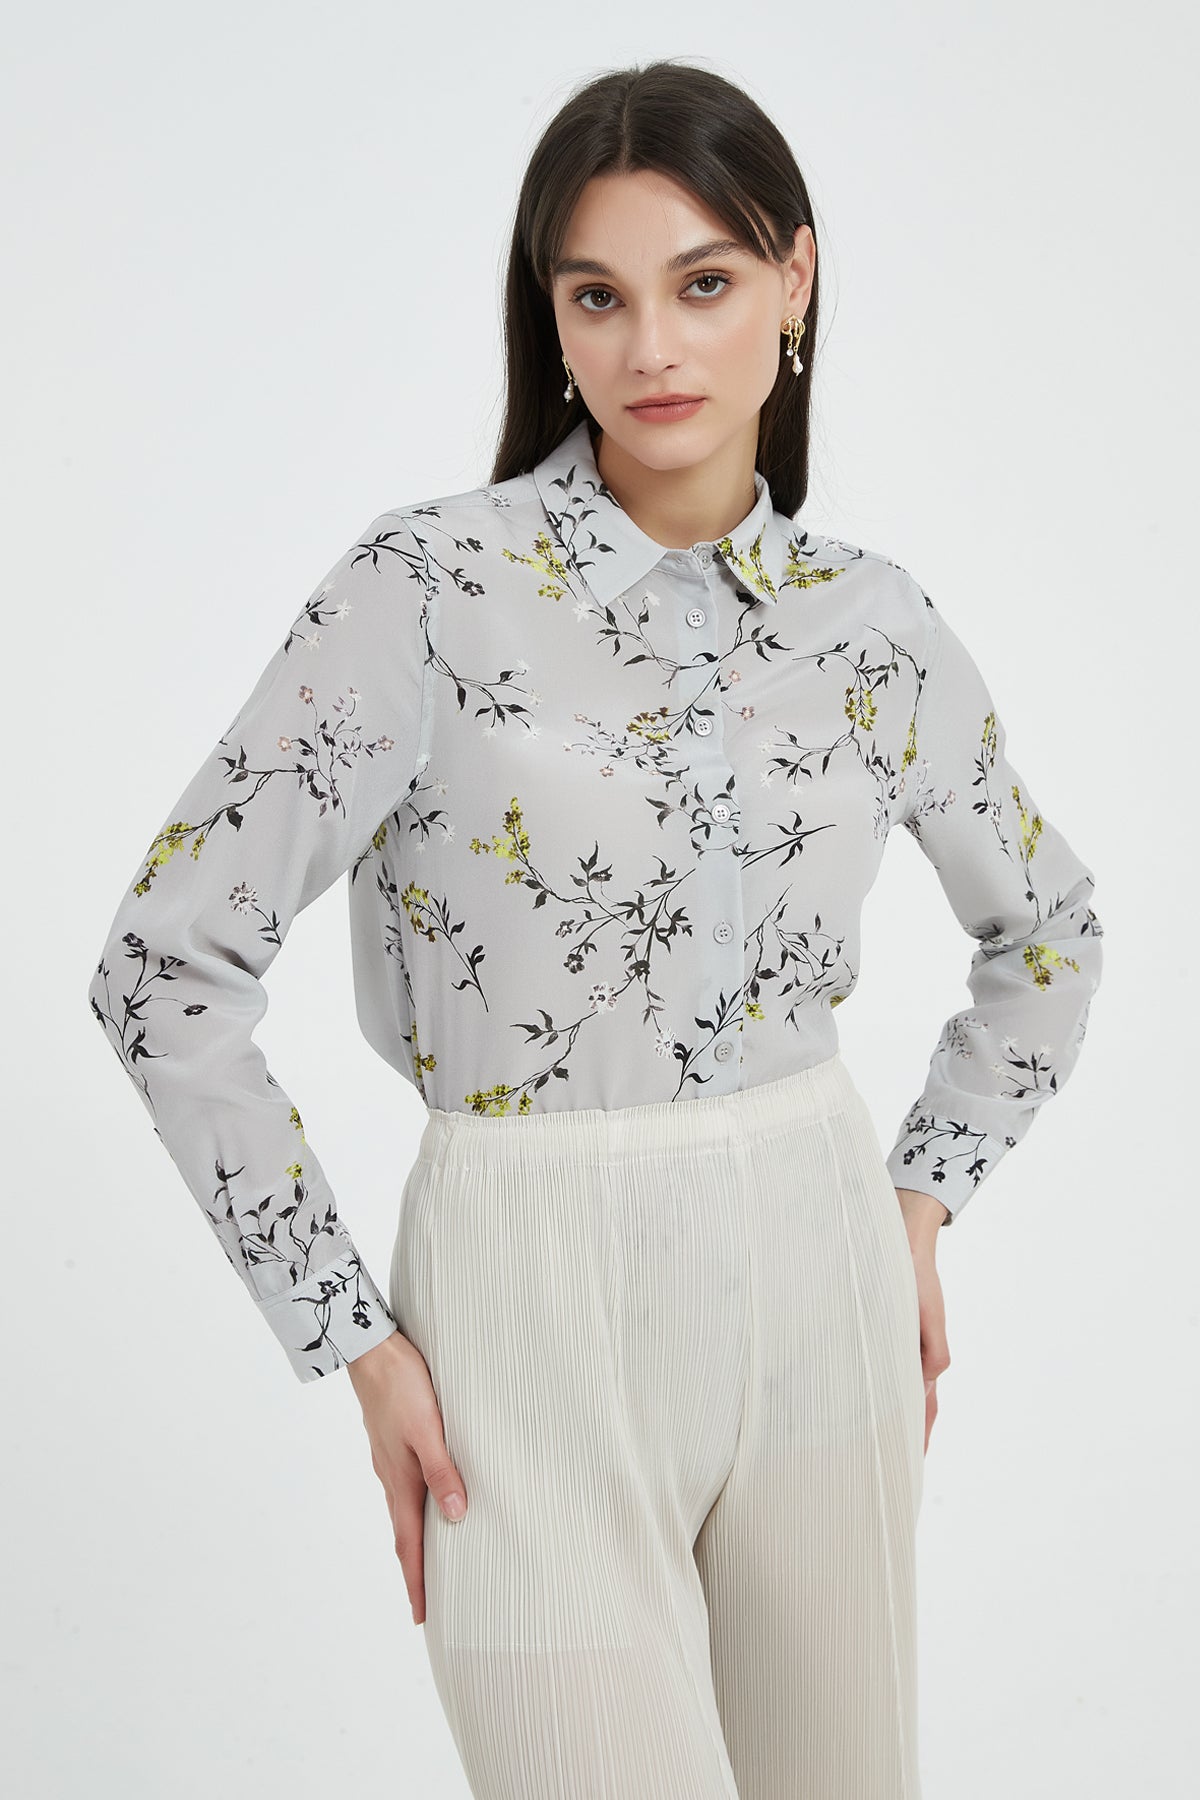 SKYE Evangeline Floral Washable Silk Shirt8